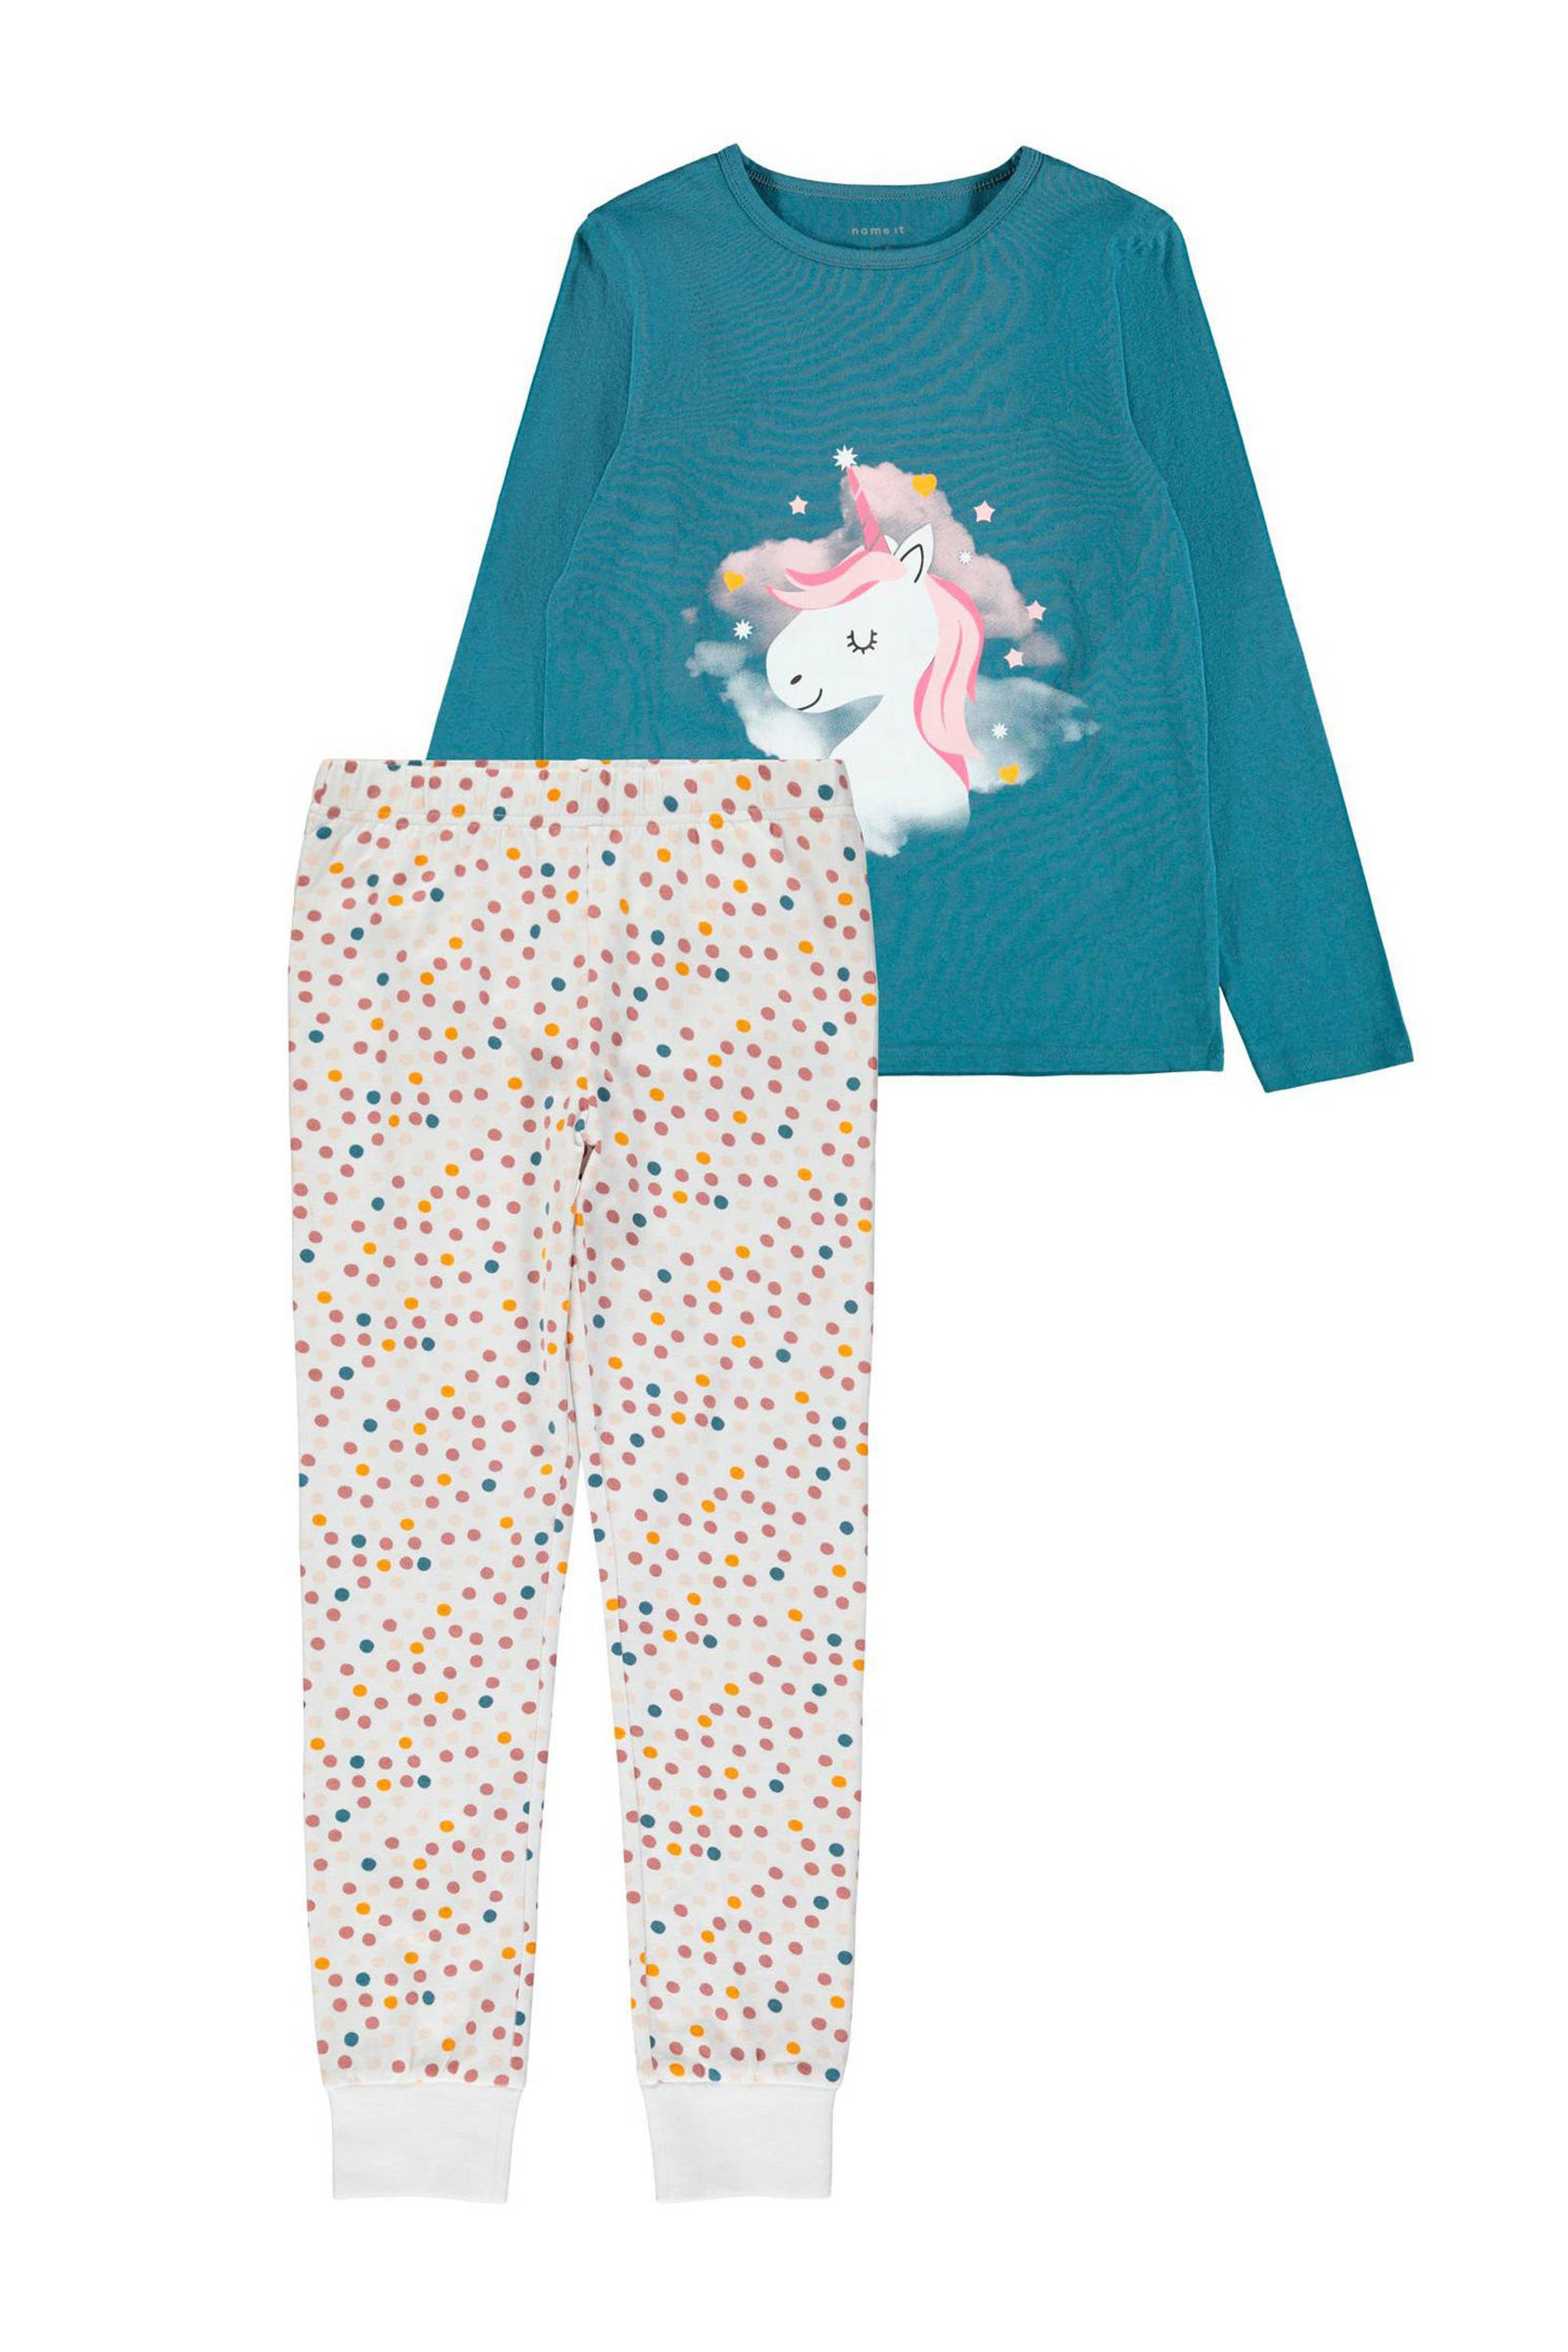 Het begin donker Guggenheim Museum NAME IT KIDS pyjama Unicorn blauwgroen/wit/roze | wehkamp